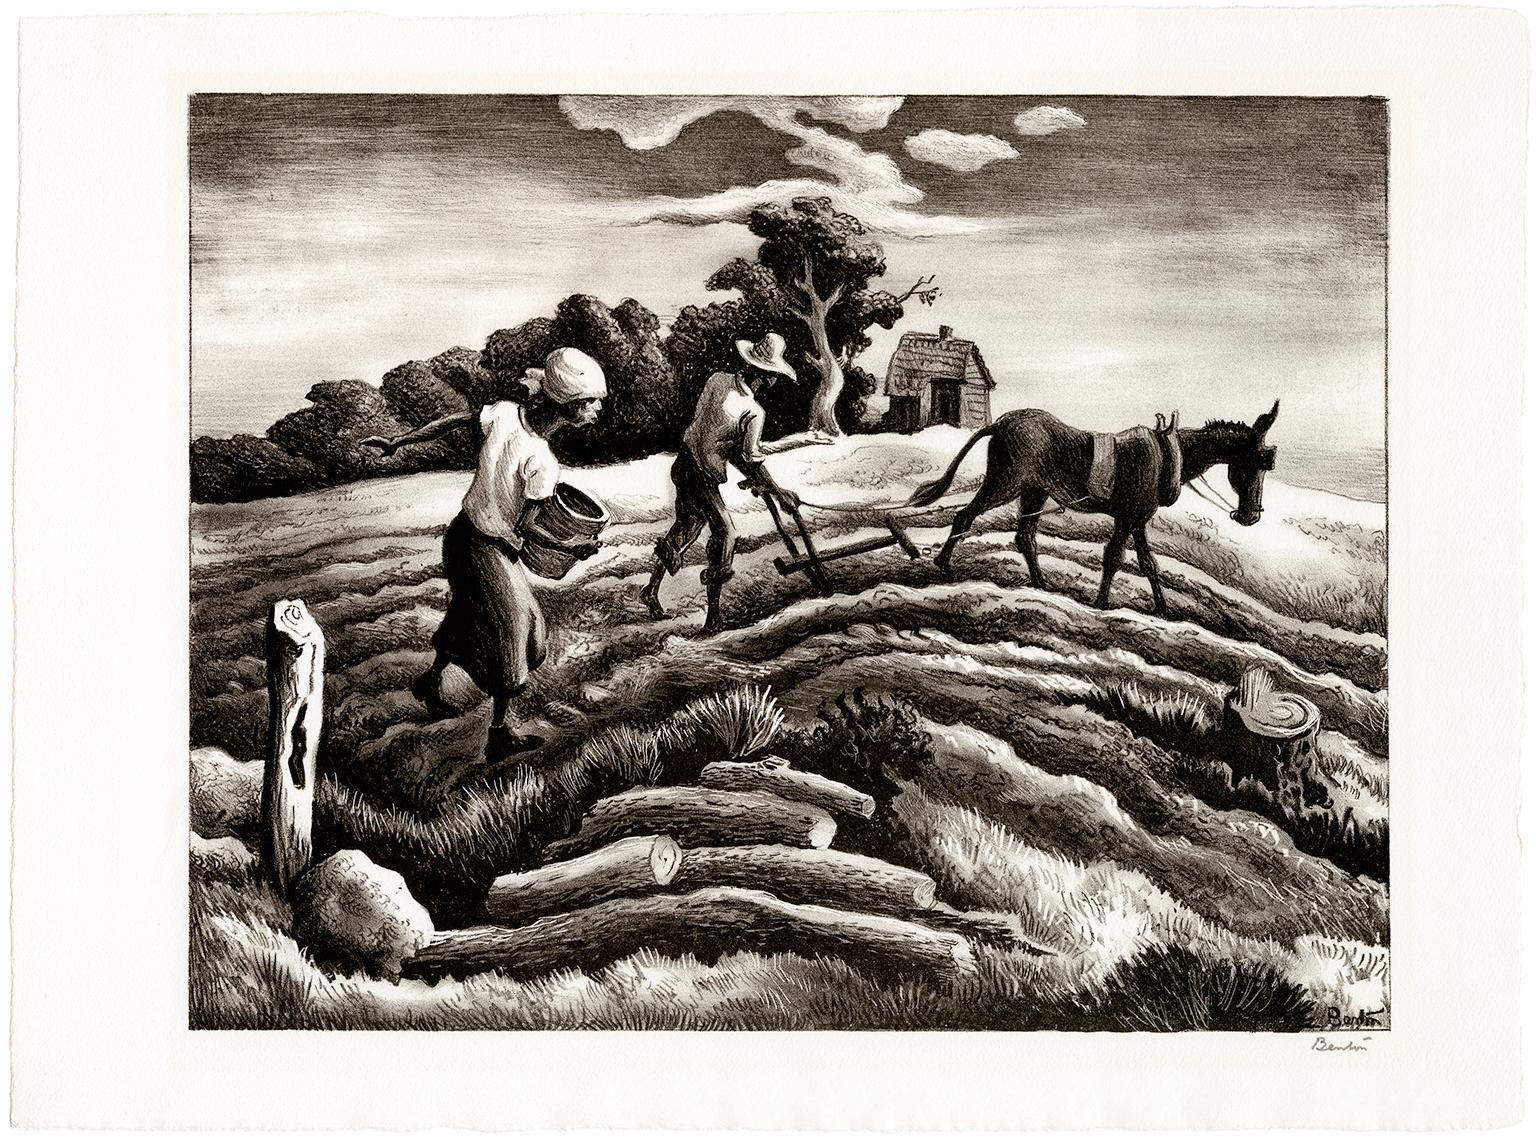 'Planting' also 'Spring Plowing' — 1930s American Regionalism - Print by Thomas Hart Benton